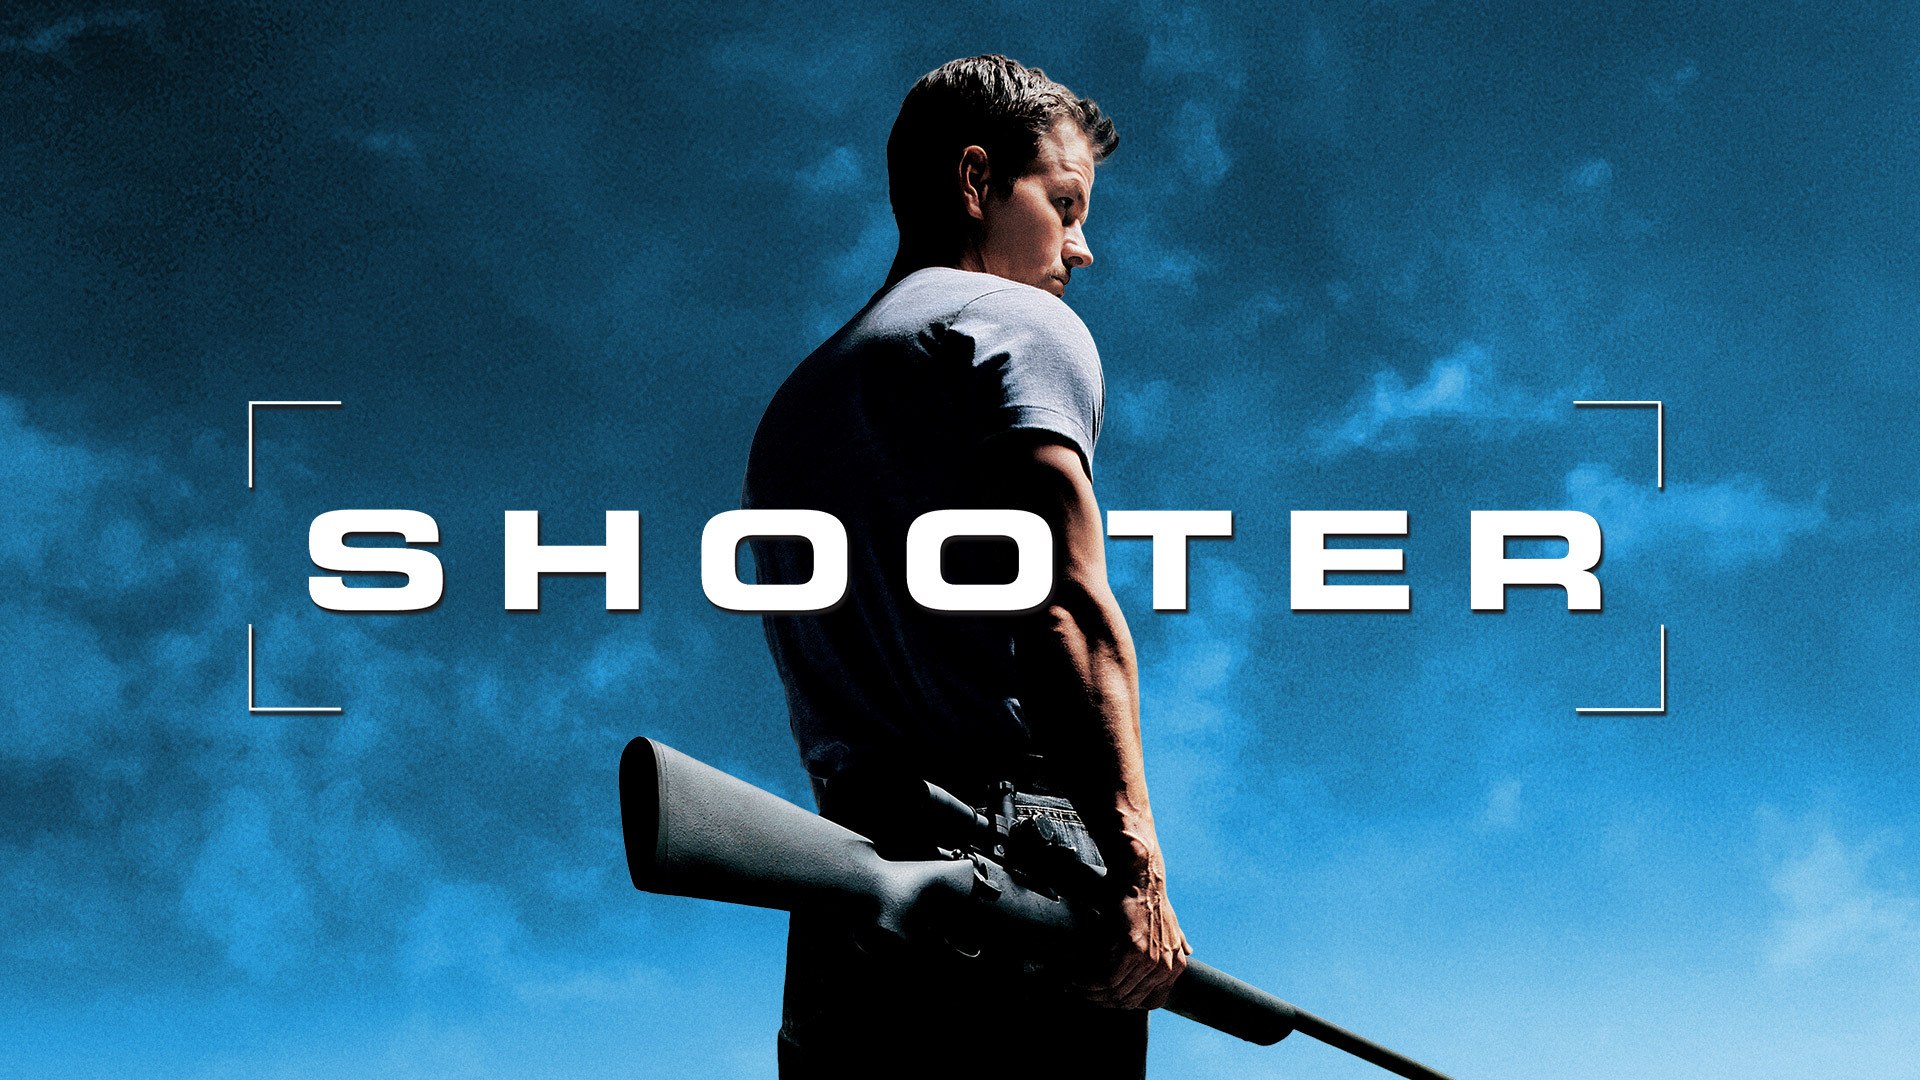 Shooter full movie